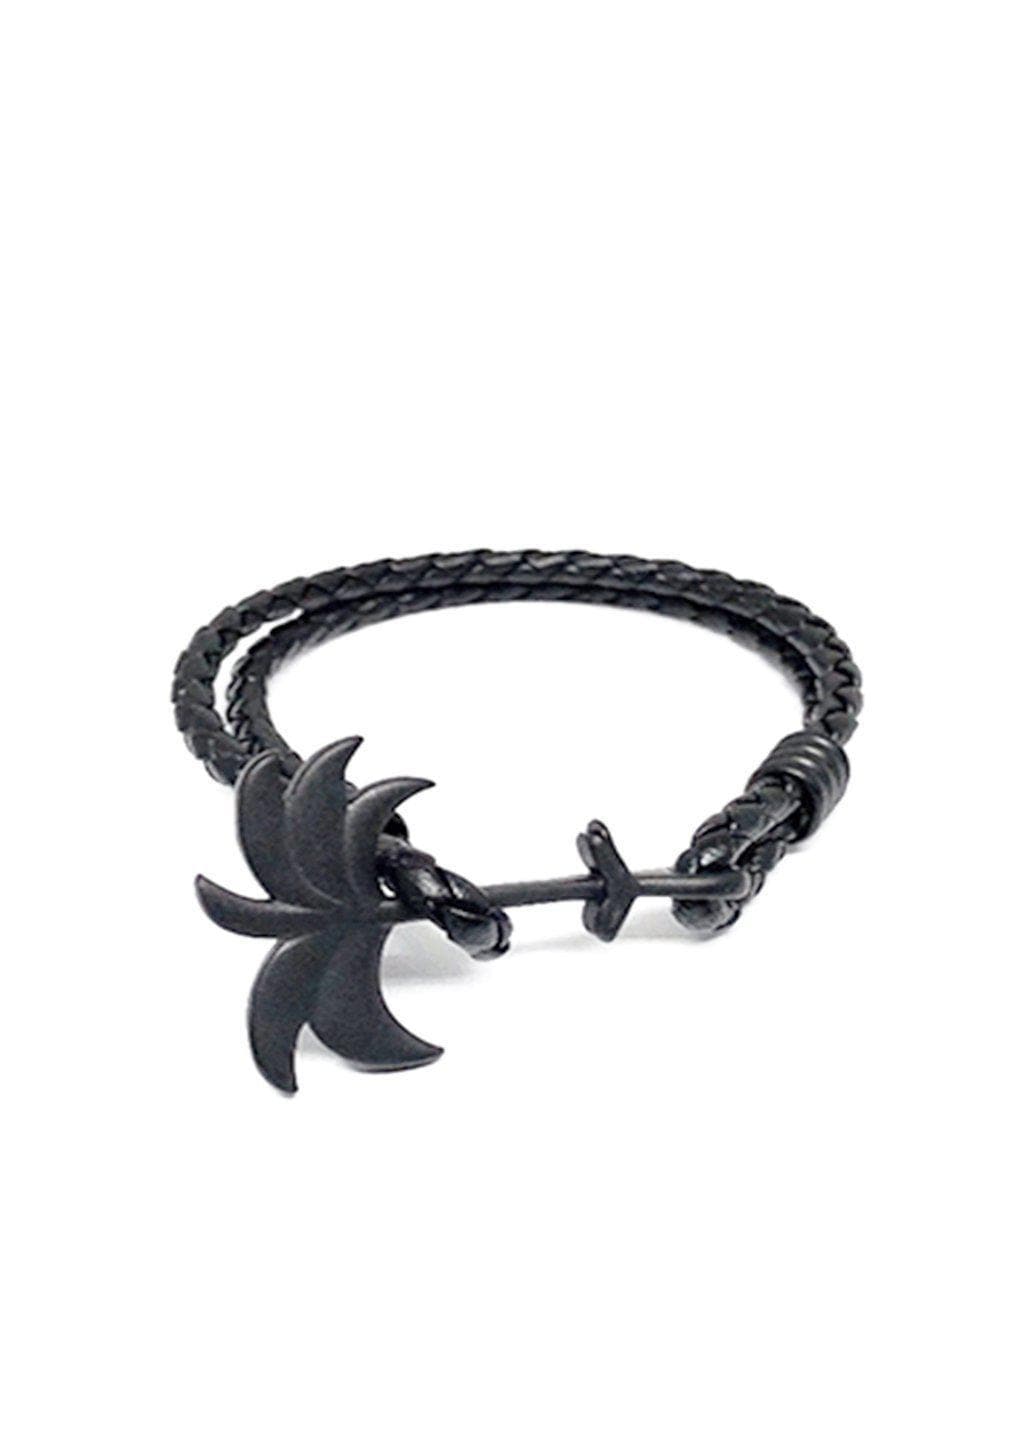 Pitch Black - Palm anchor bracelet with black leather.